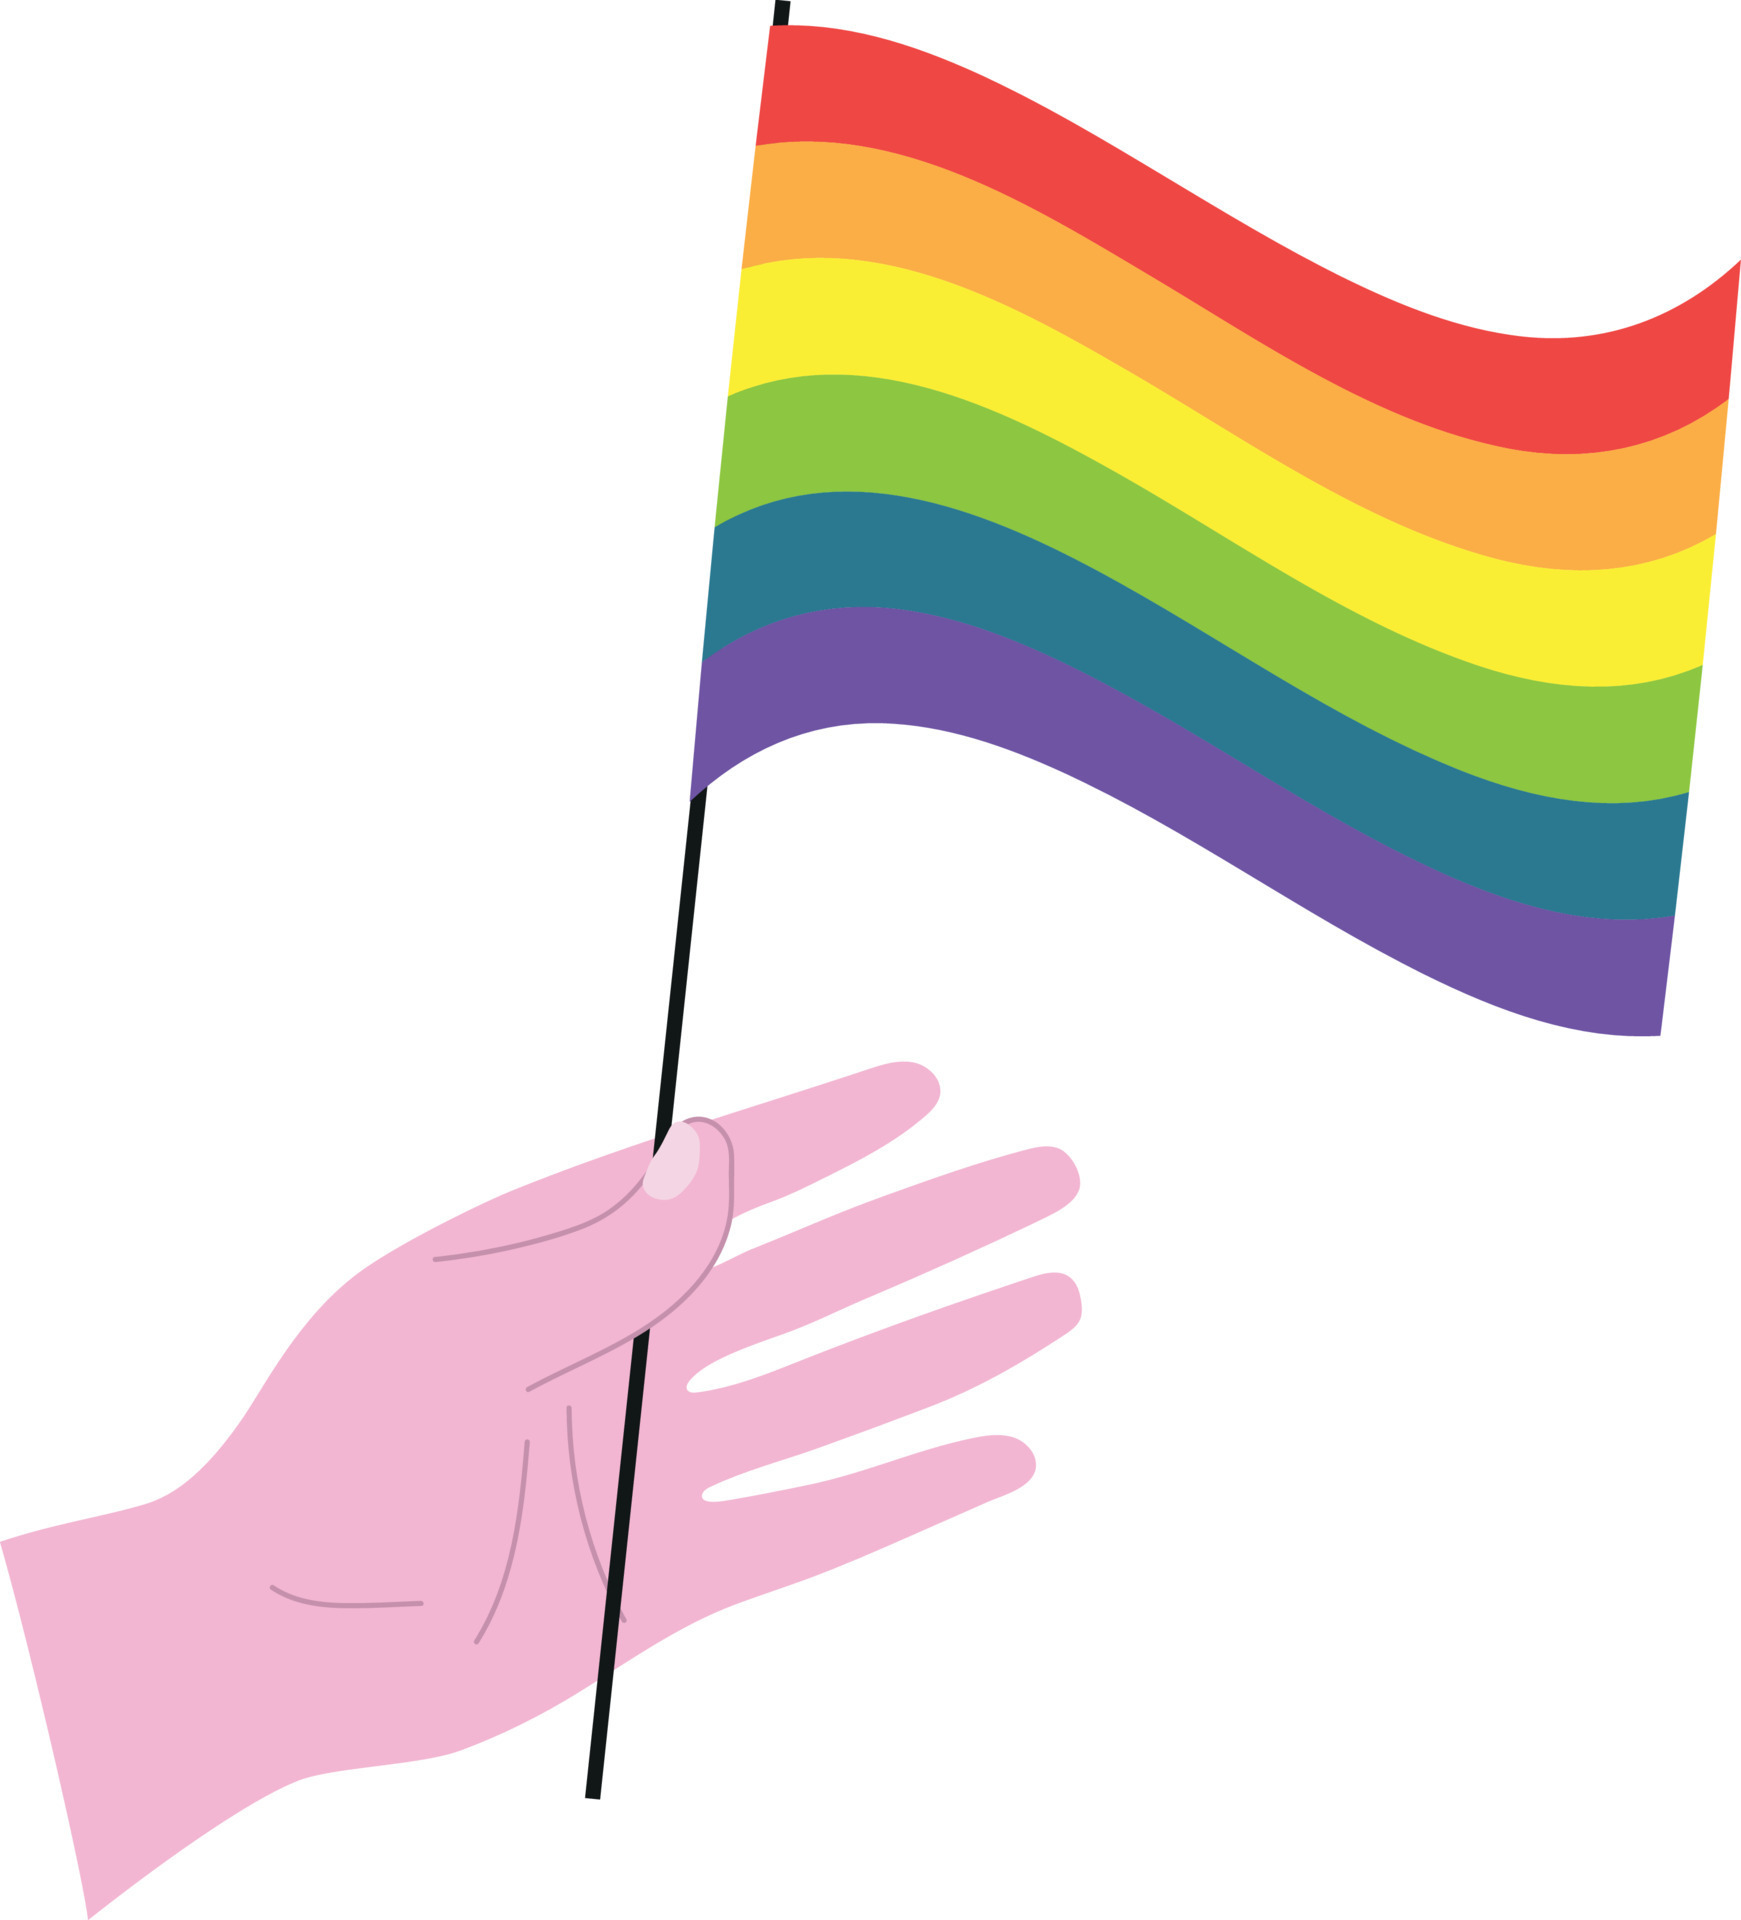 main humaine tenant le drapeau lgbt avec fond blanc, illustration